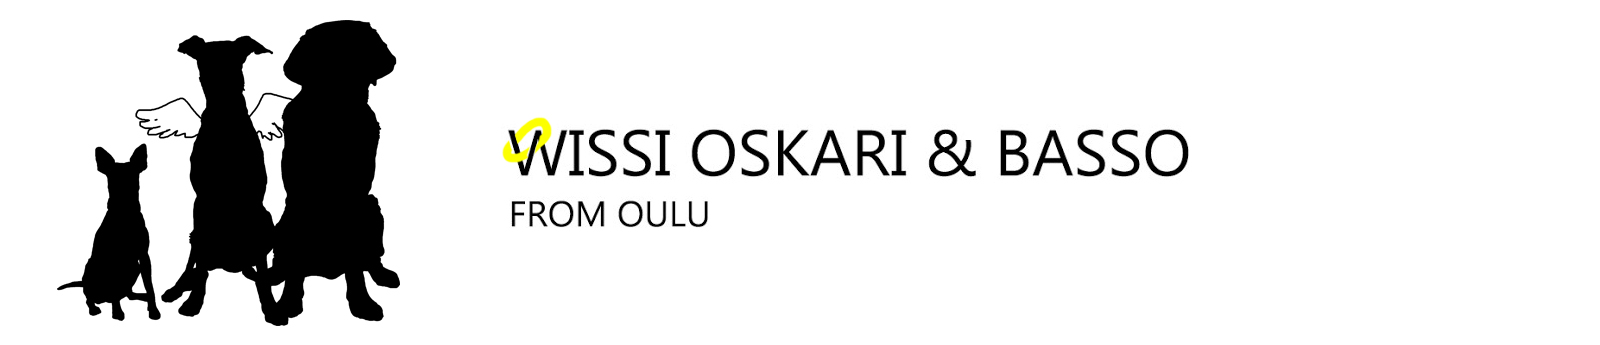 Oskari & Basso from oulu